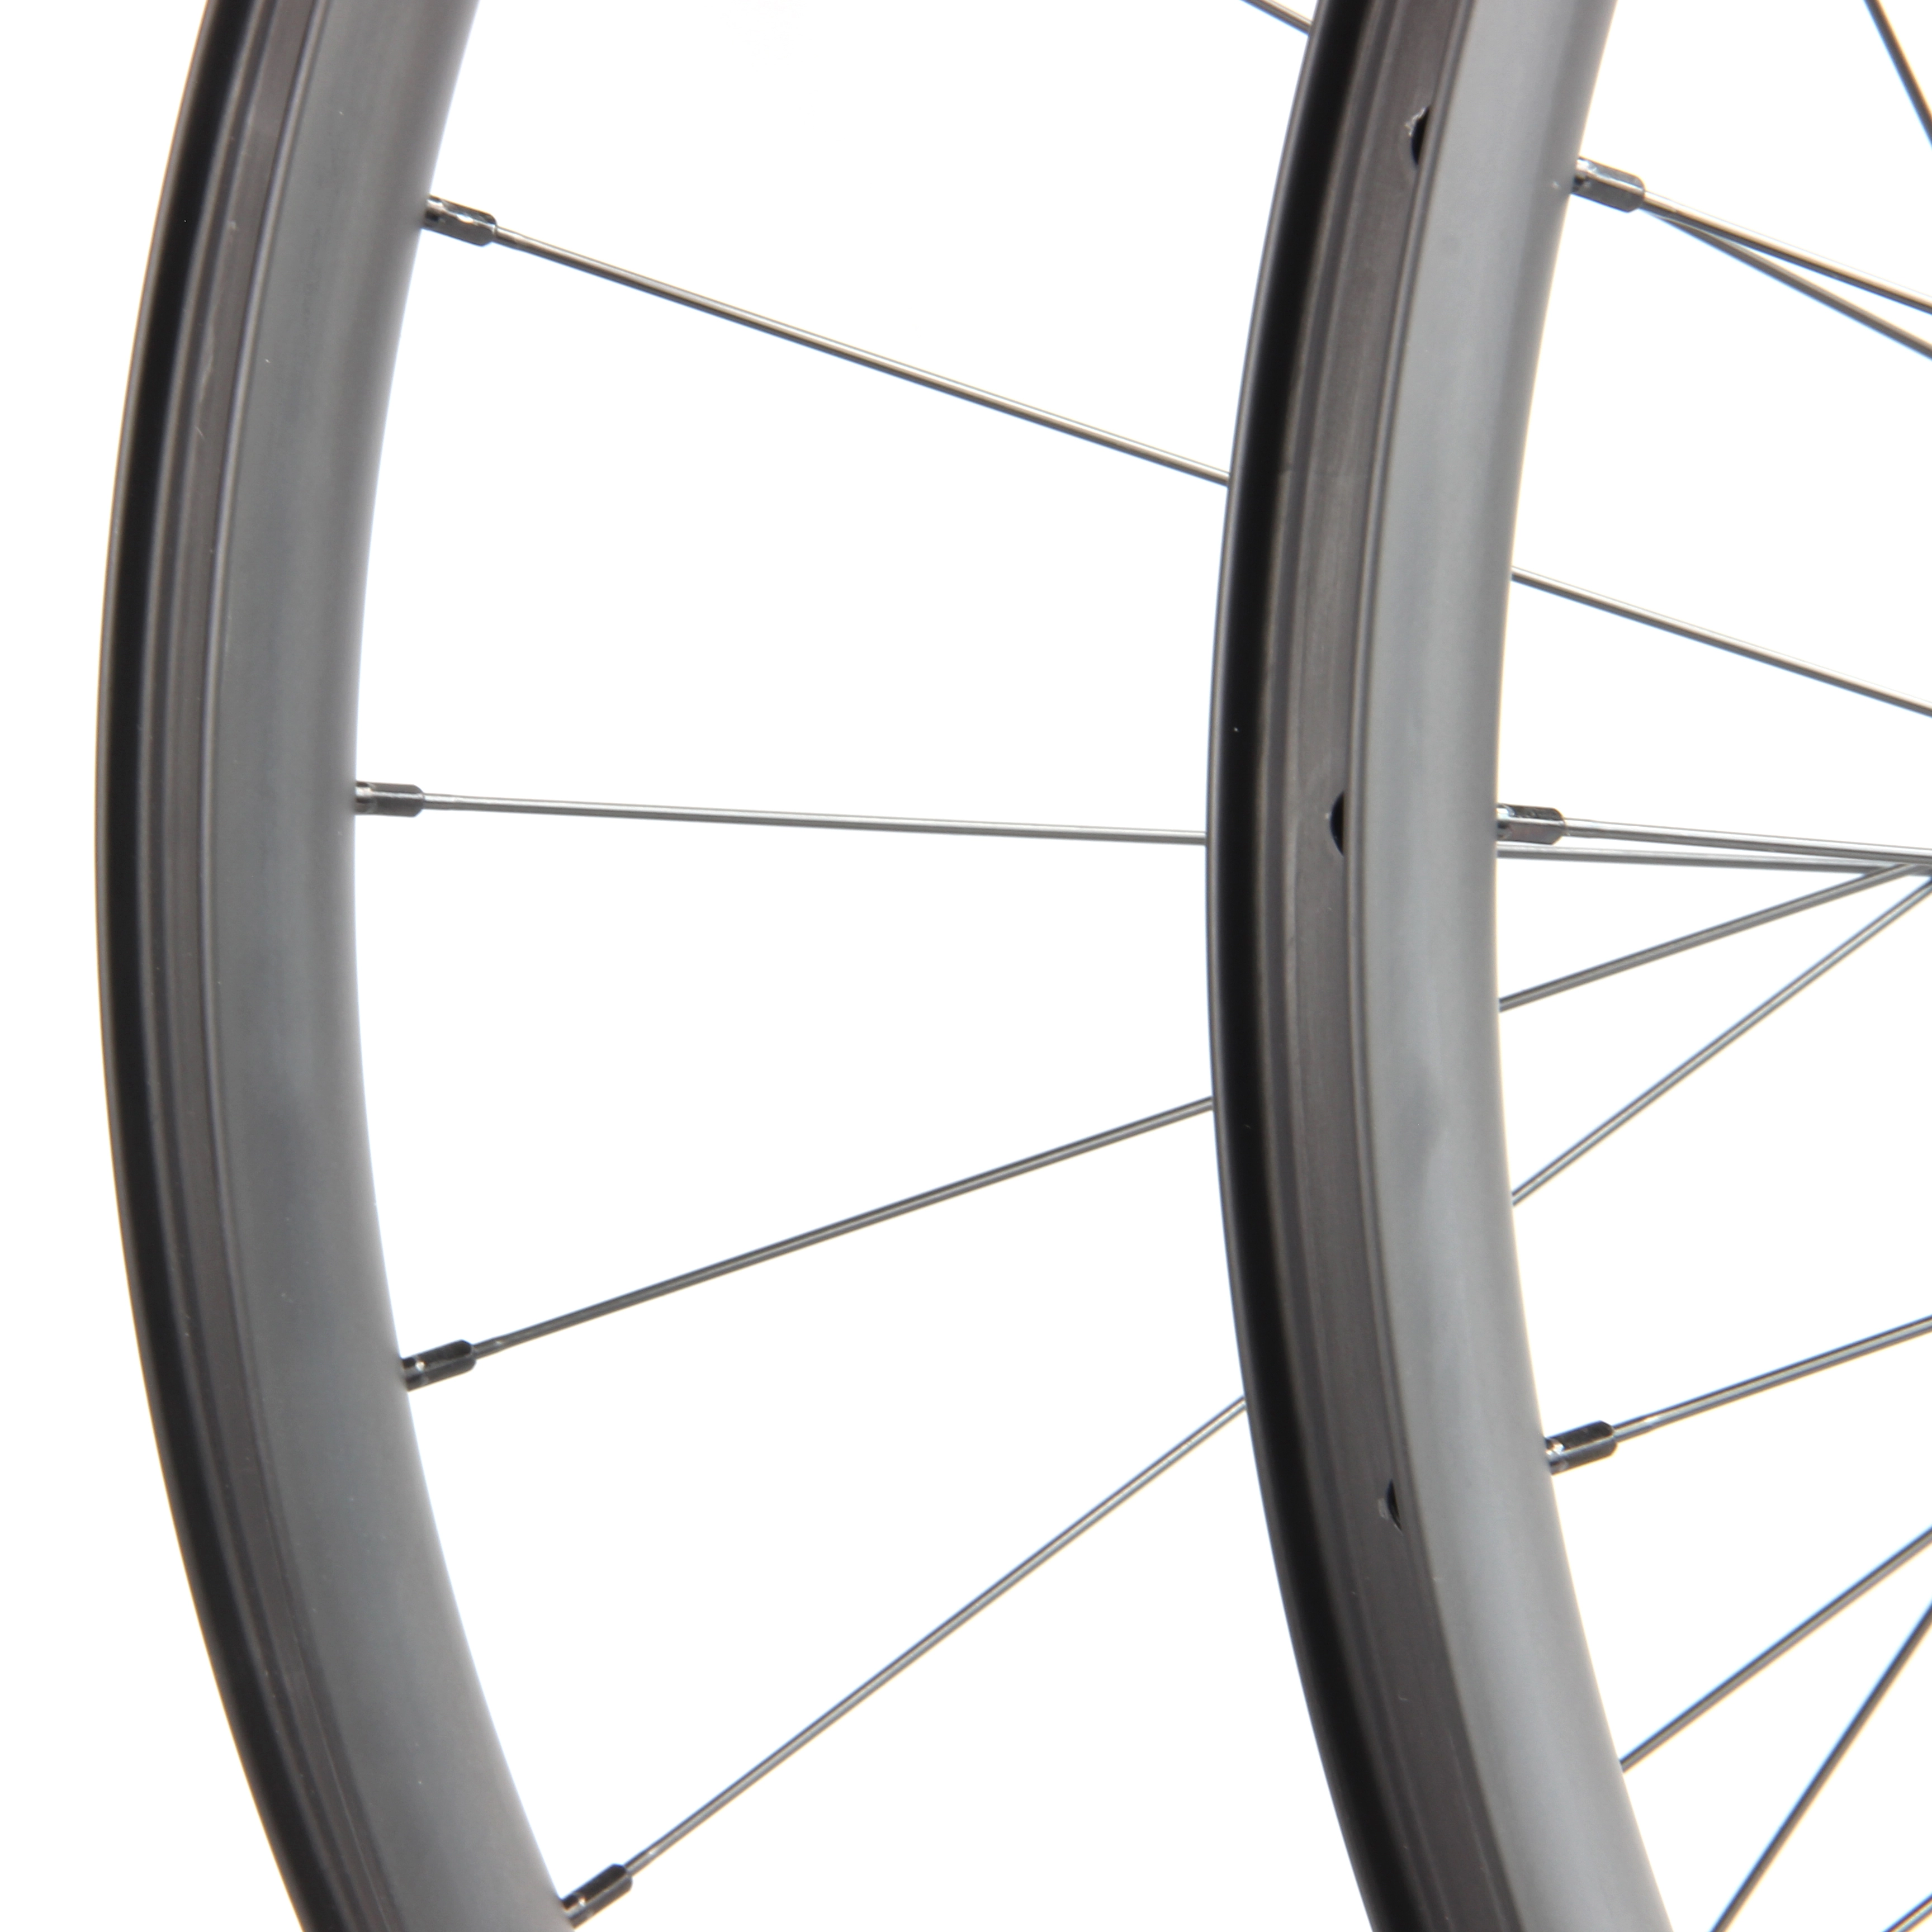 ProX Carbon Fiber MTB Wheels DT350 Boost Mountain Bike Wheel Sets